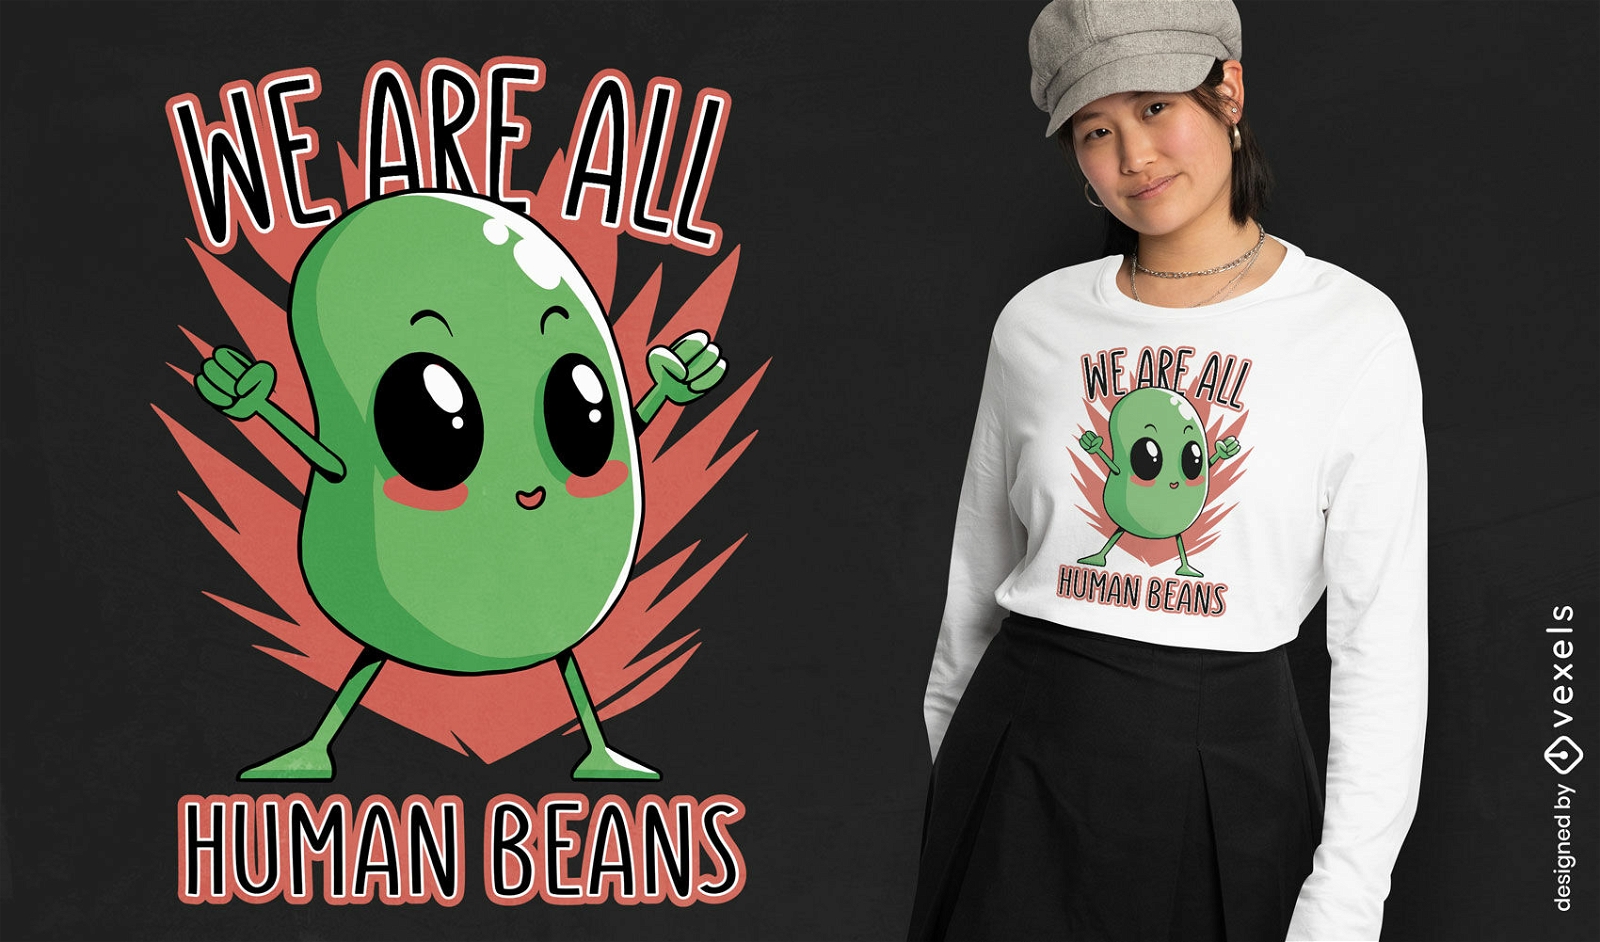 Cute green bean cartoon t-shirt design